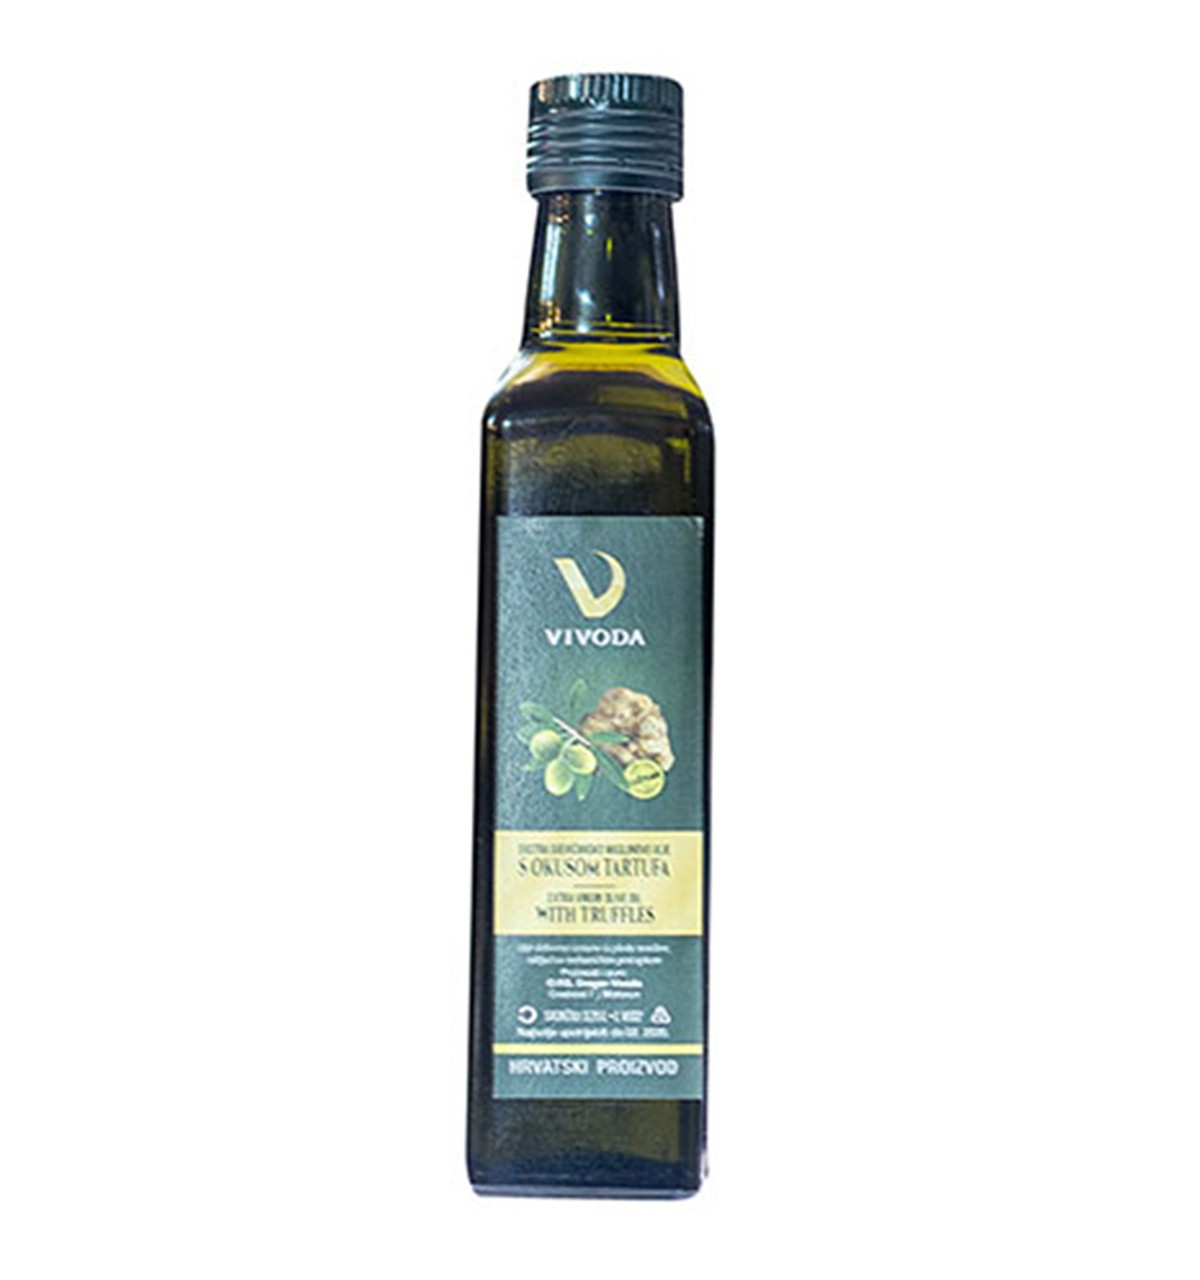 Olio d'oliva con aroma di tartufo, Vivoda